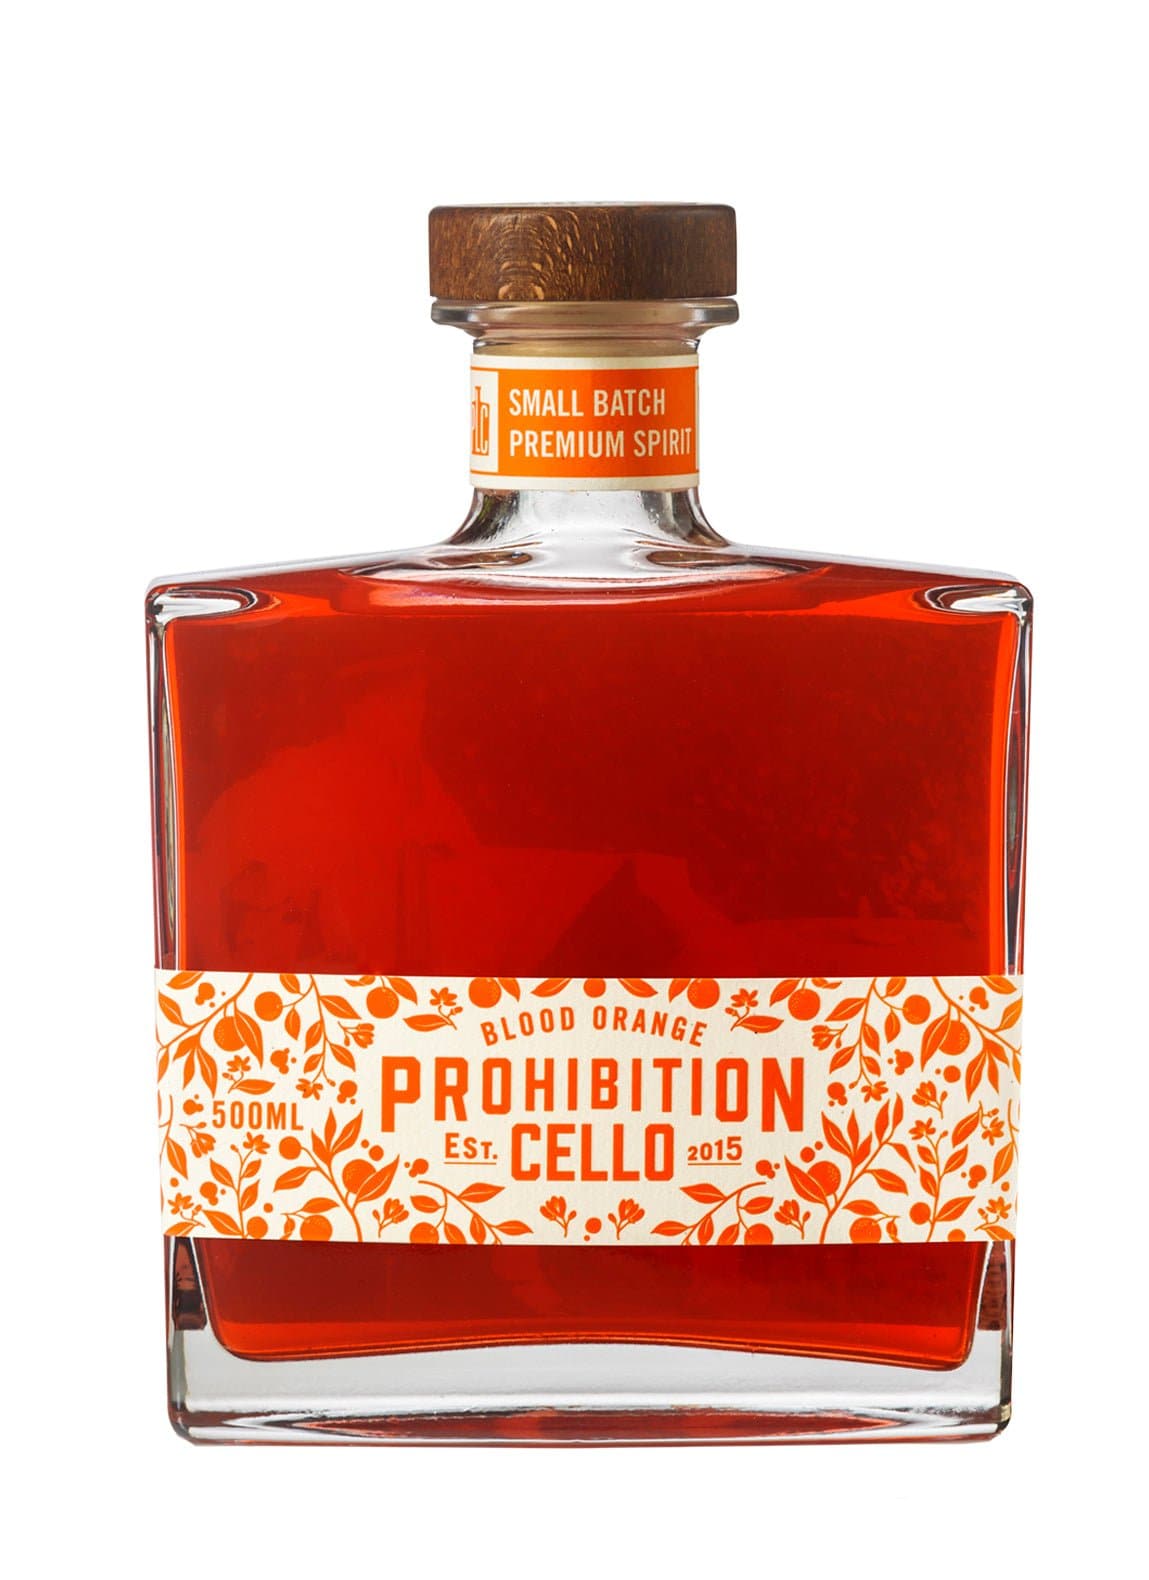 Prohibition Blood Orange Cello Liquor 22% 500ml | Gin | Shop online at Spirits of France